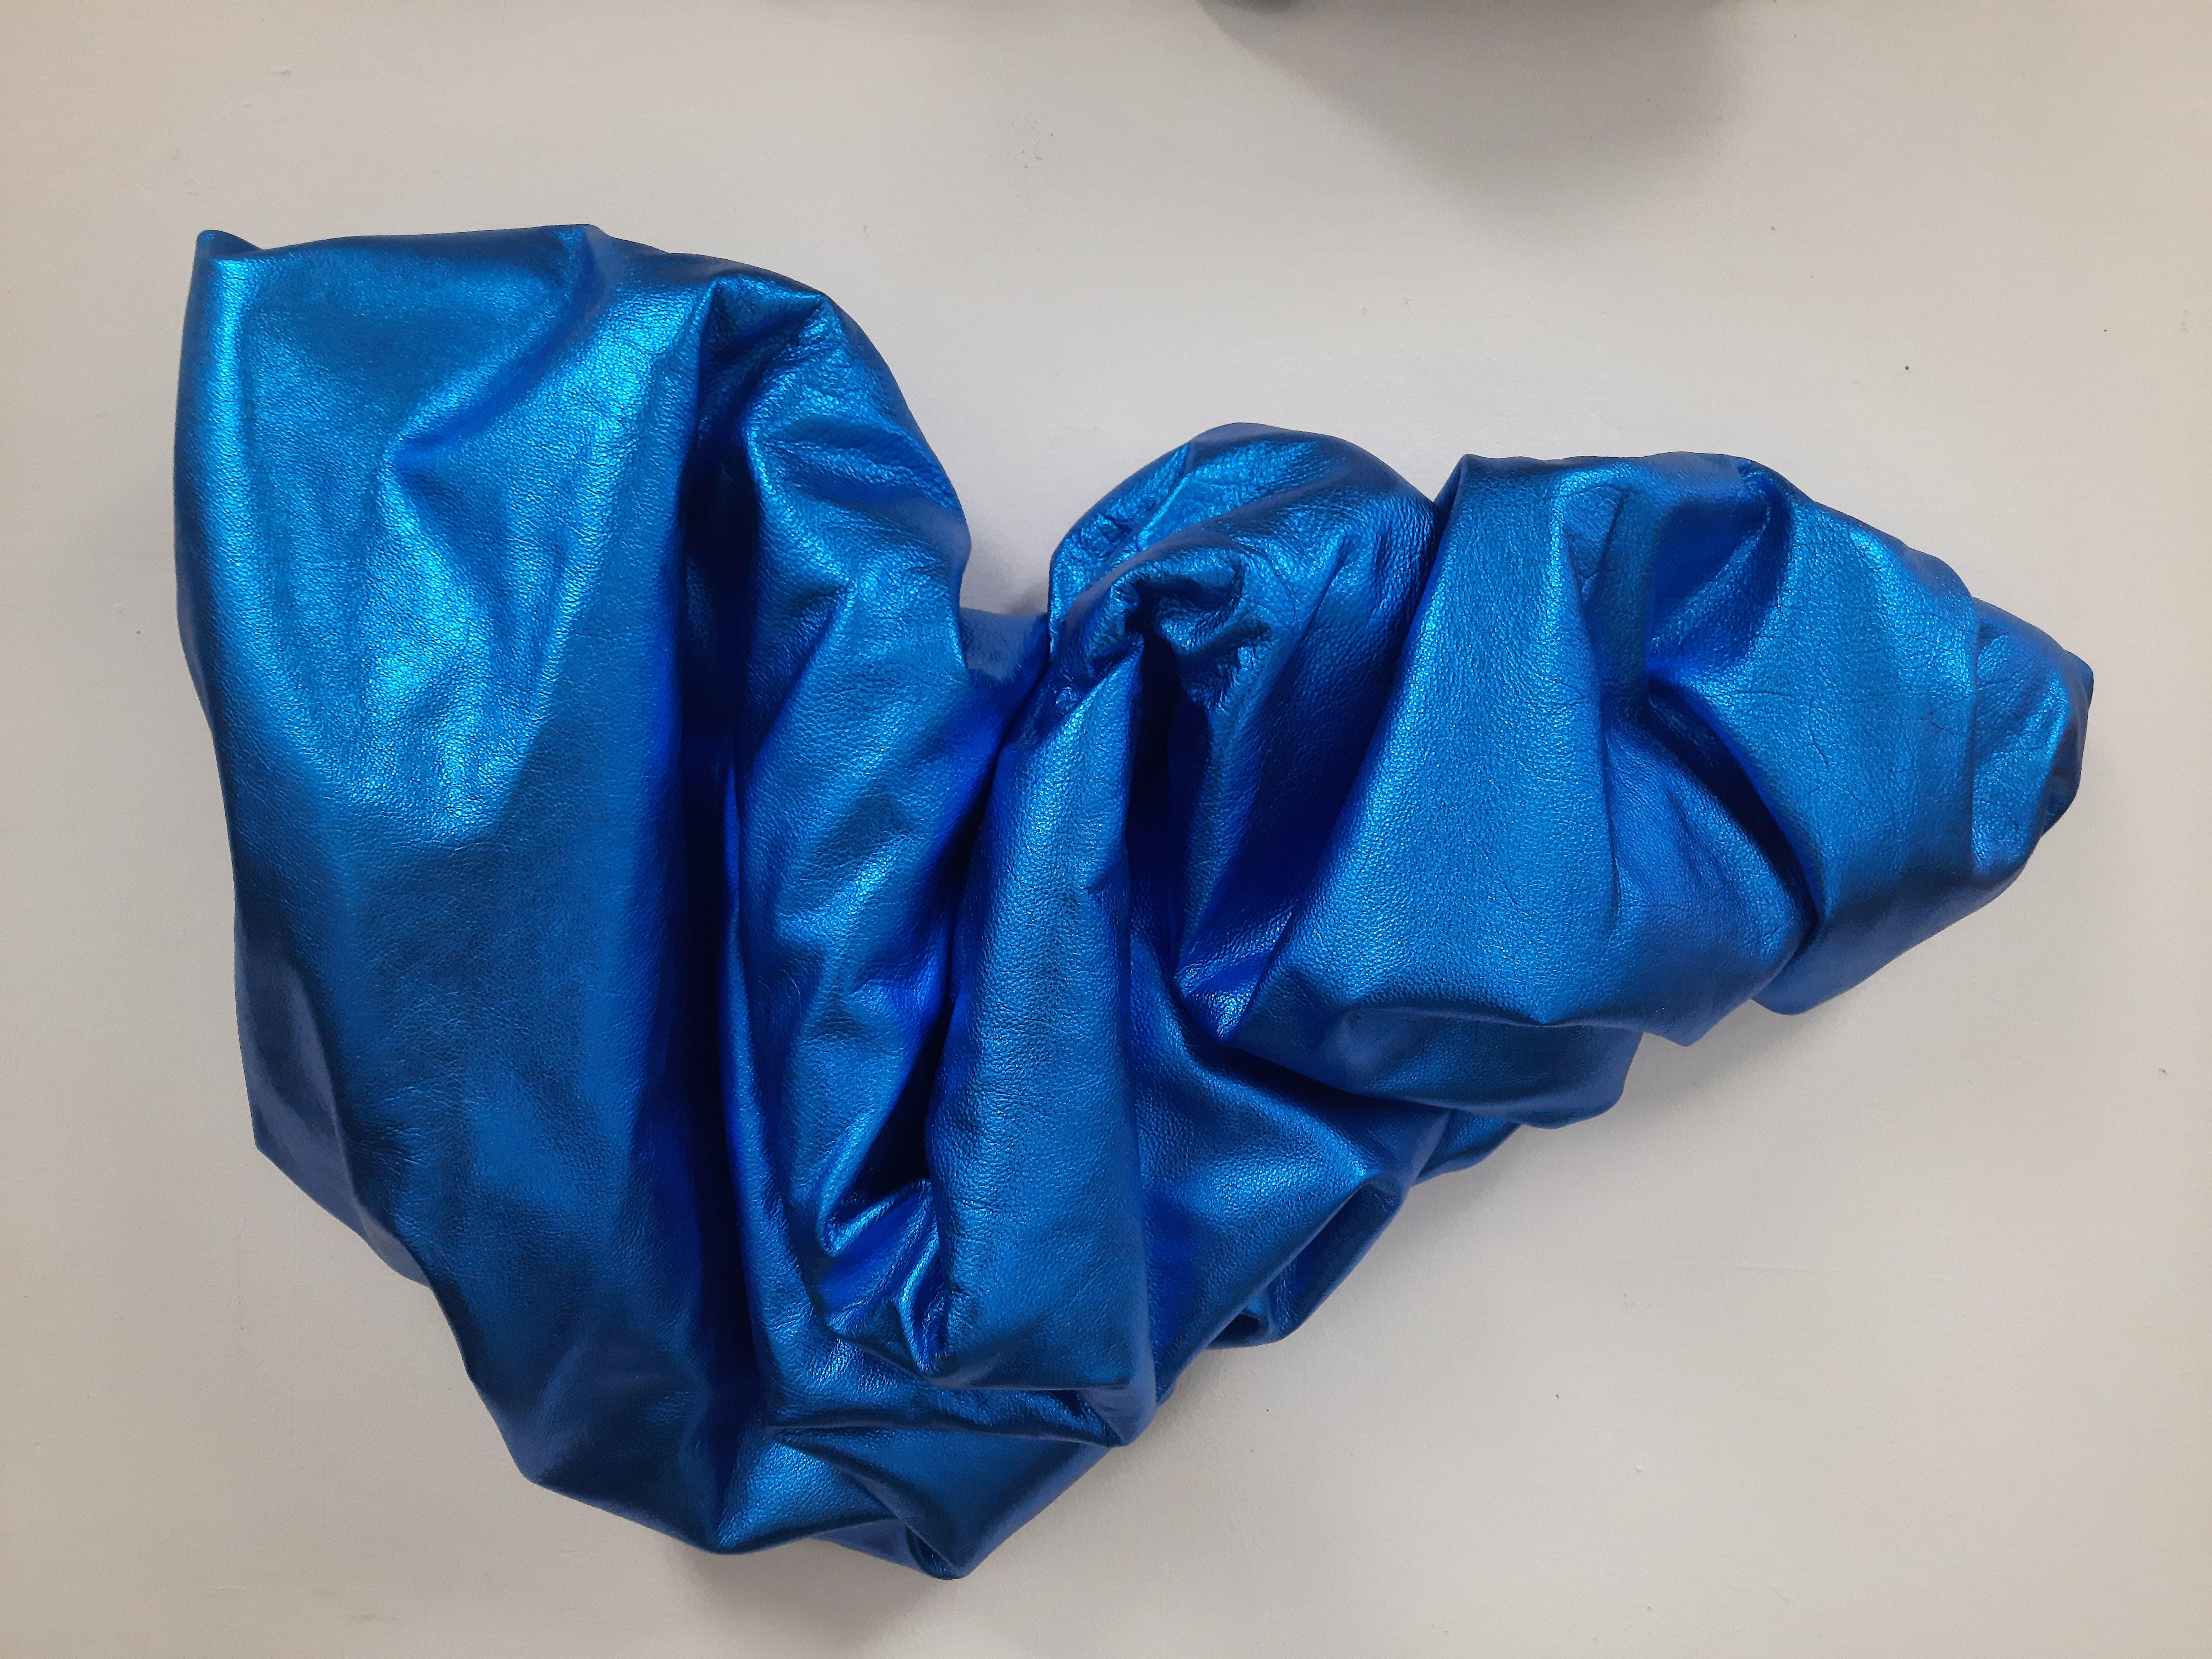 Blau 107 (folds pop slick metallic smooth leather wall sculpture art)